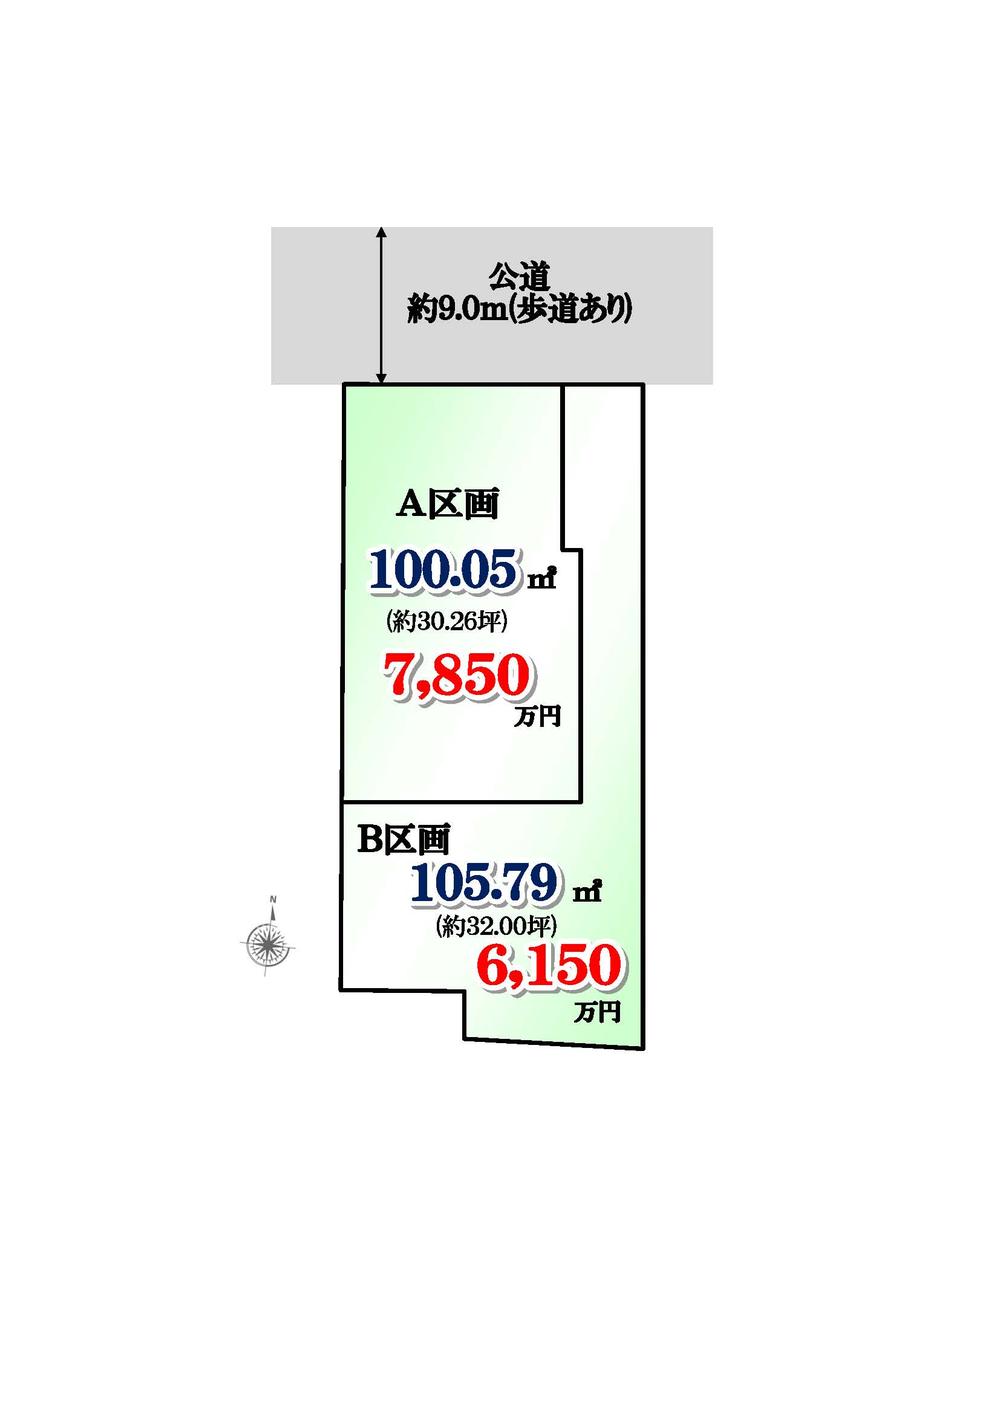 Compartment figure. Land price 61,500,000 yen, Land area 105.79 sq m